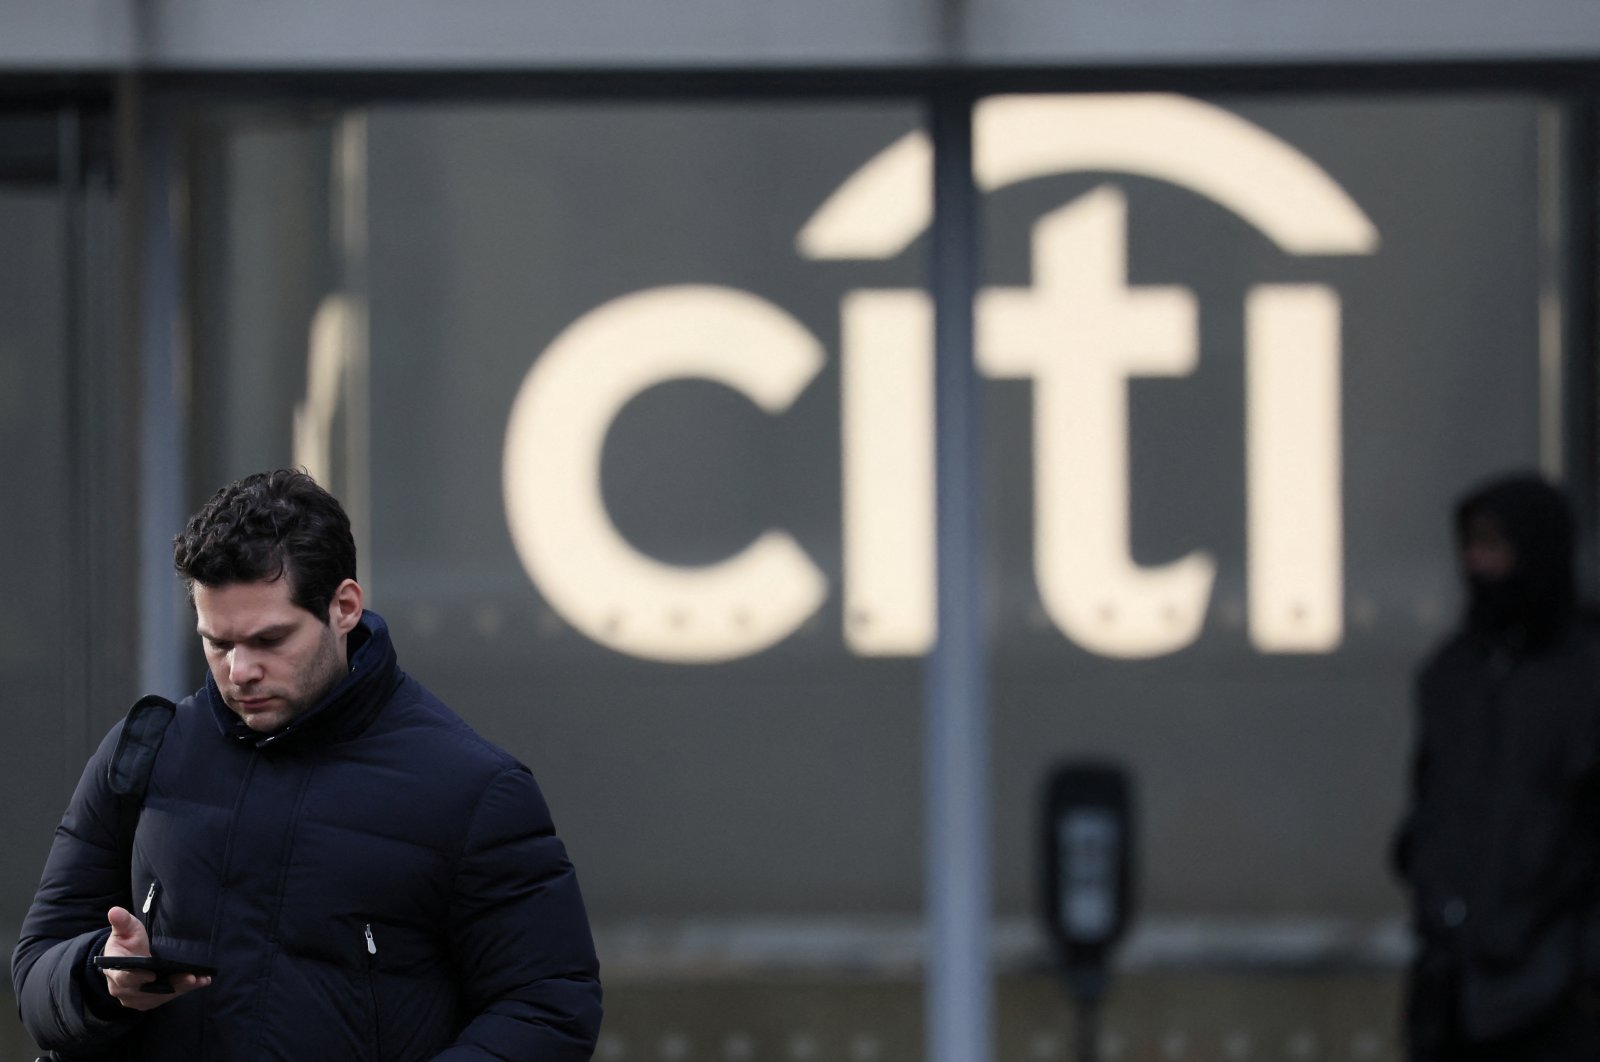 UK regulators slap Citi with $79M fine over trading, control failures